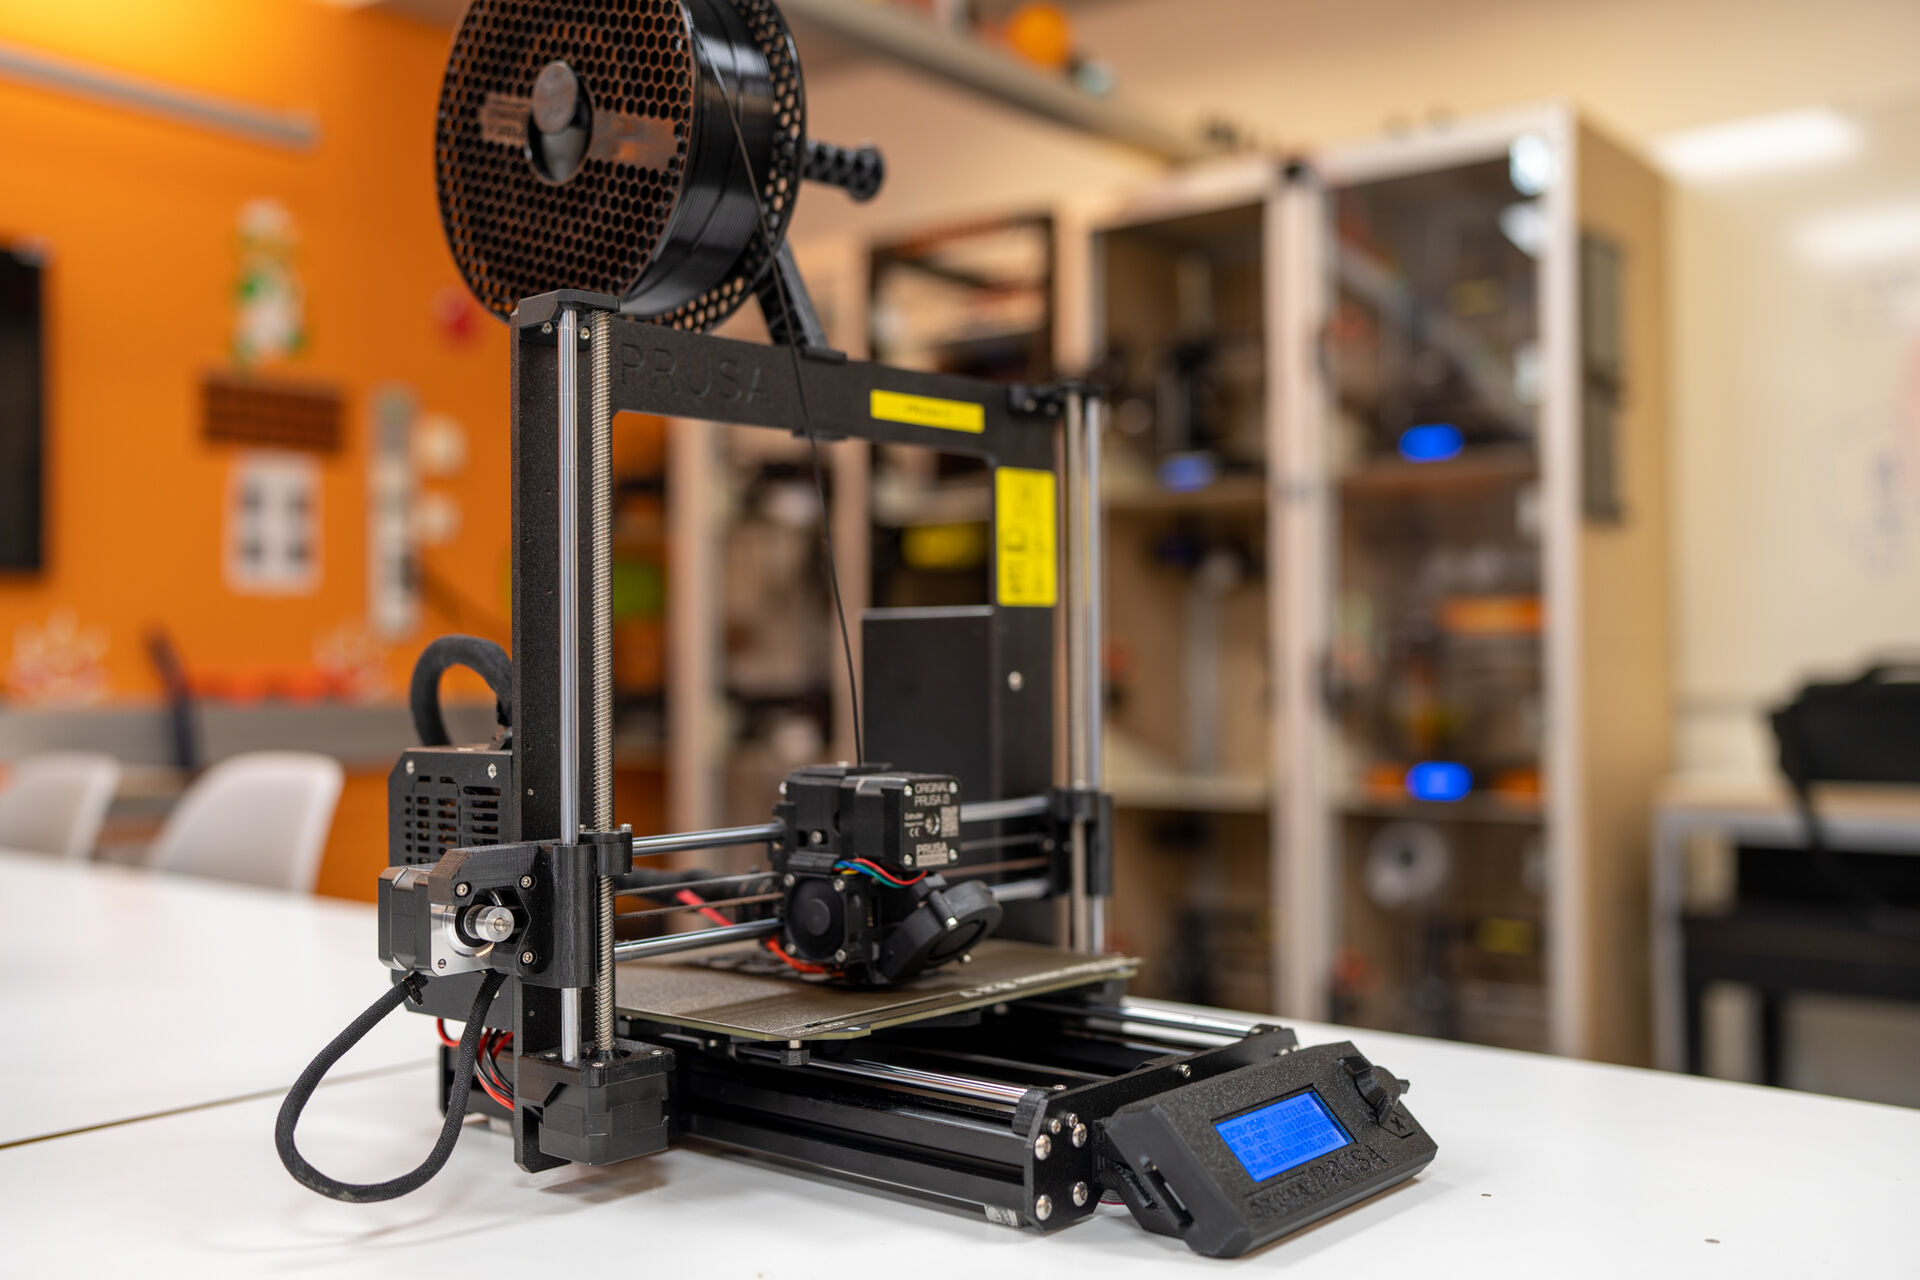 Prusa MK3s+ 3D printer